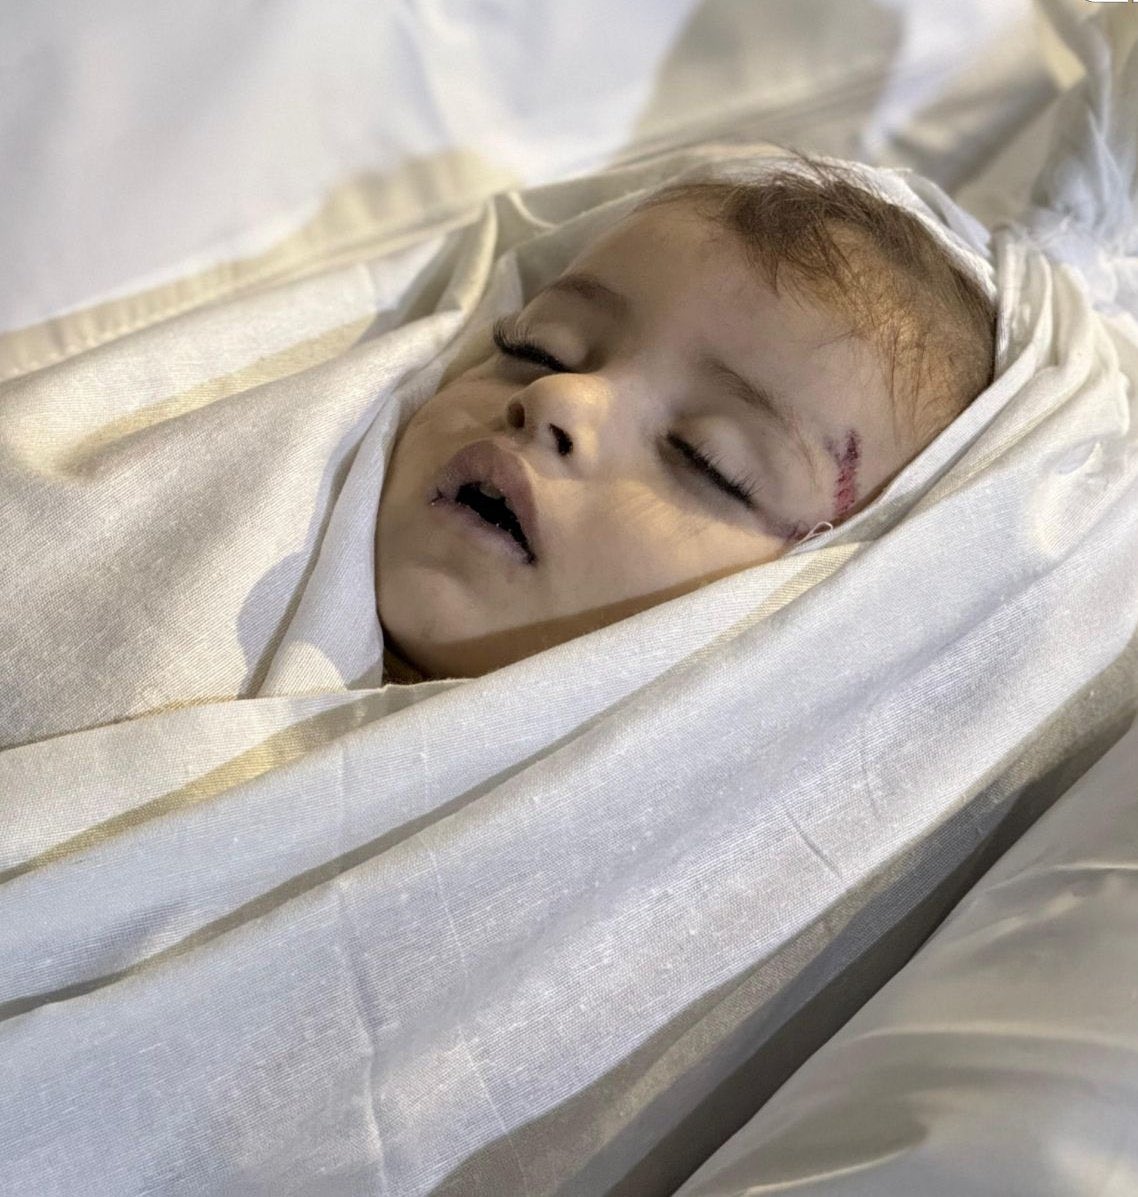 Bebe katili İsrail , baby killer israel
#teröristisrail